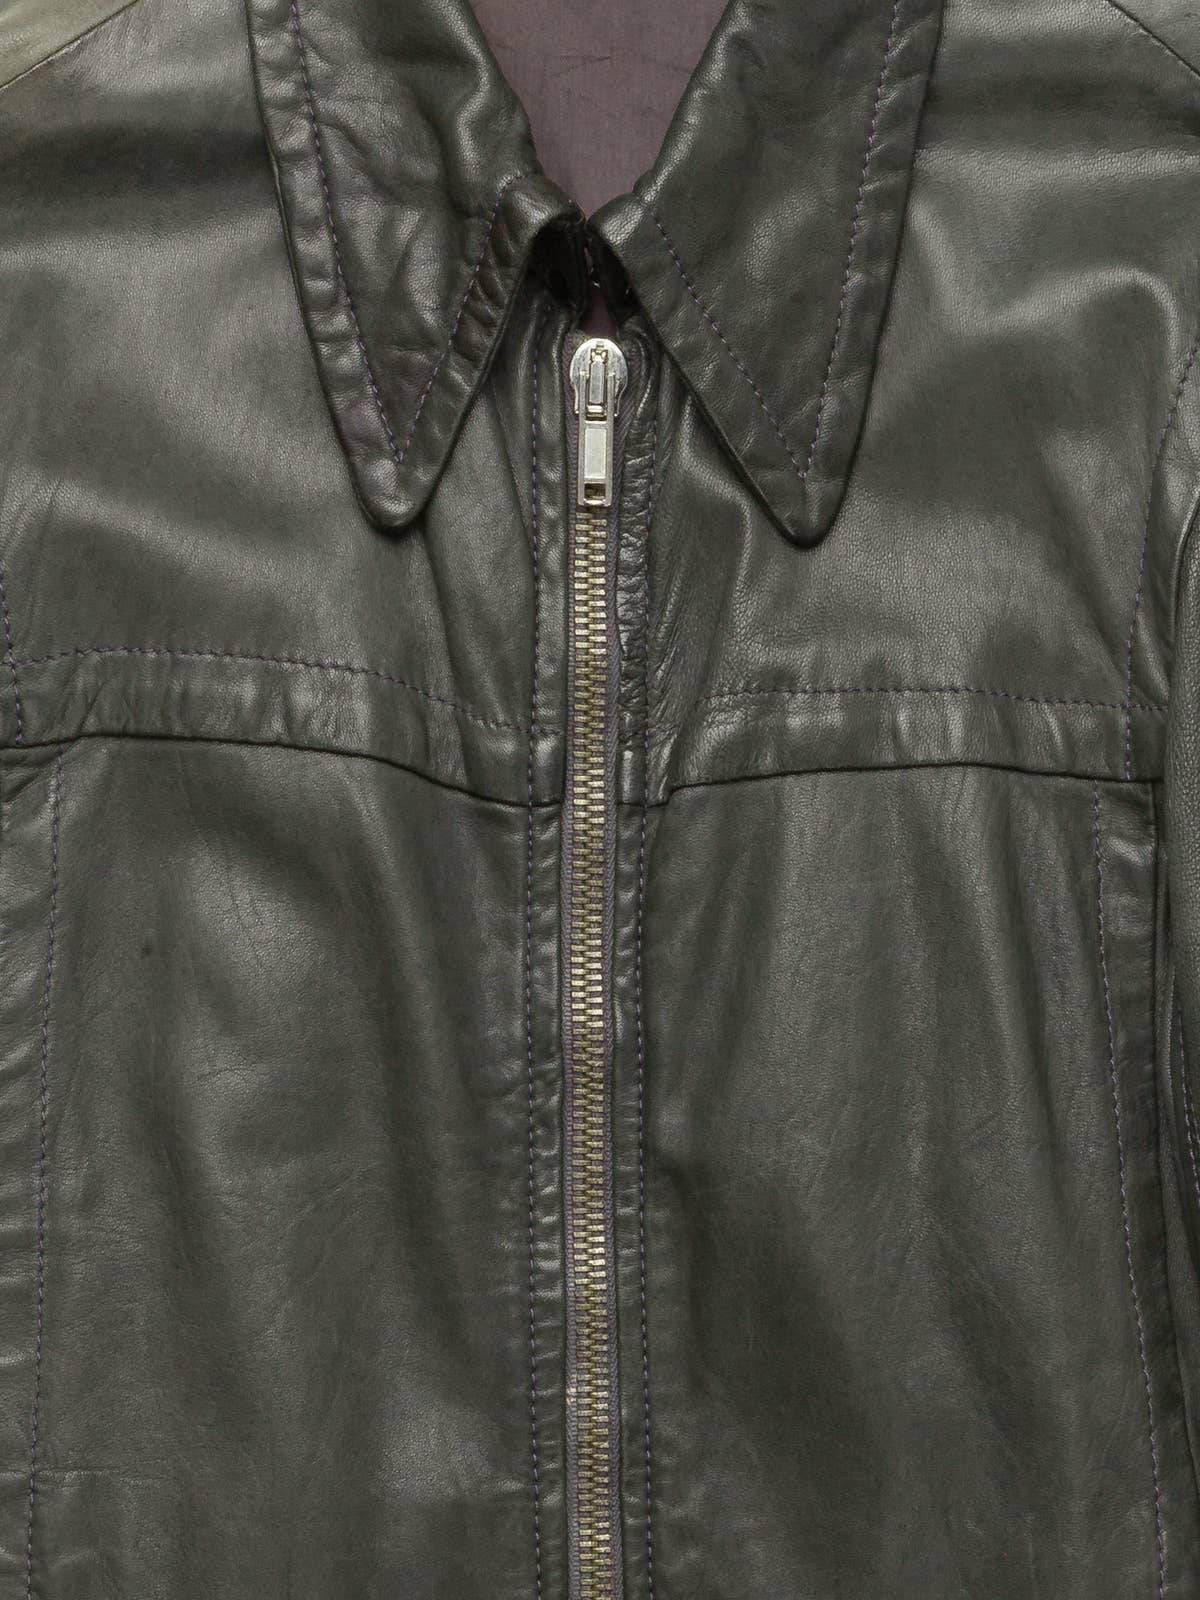 Heavy Leather Jacket - Groupie